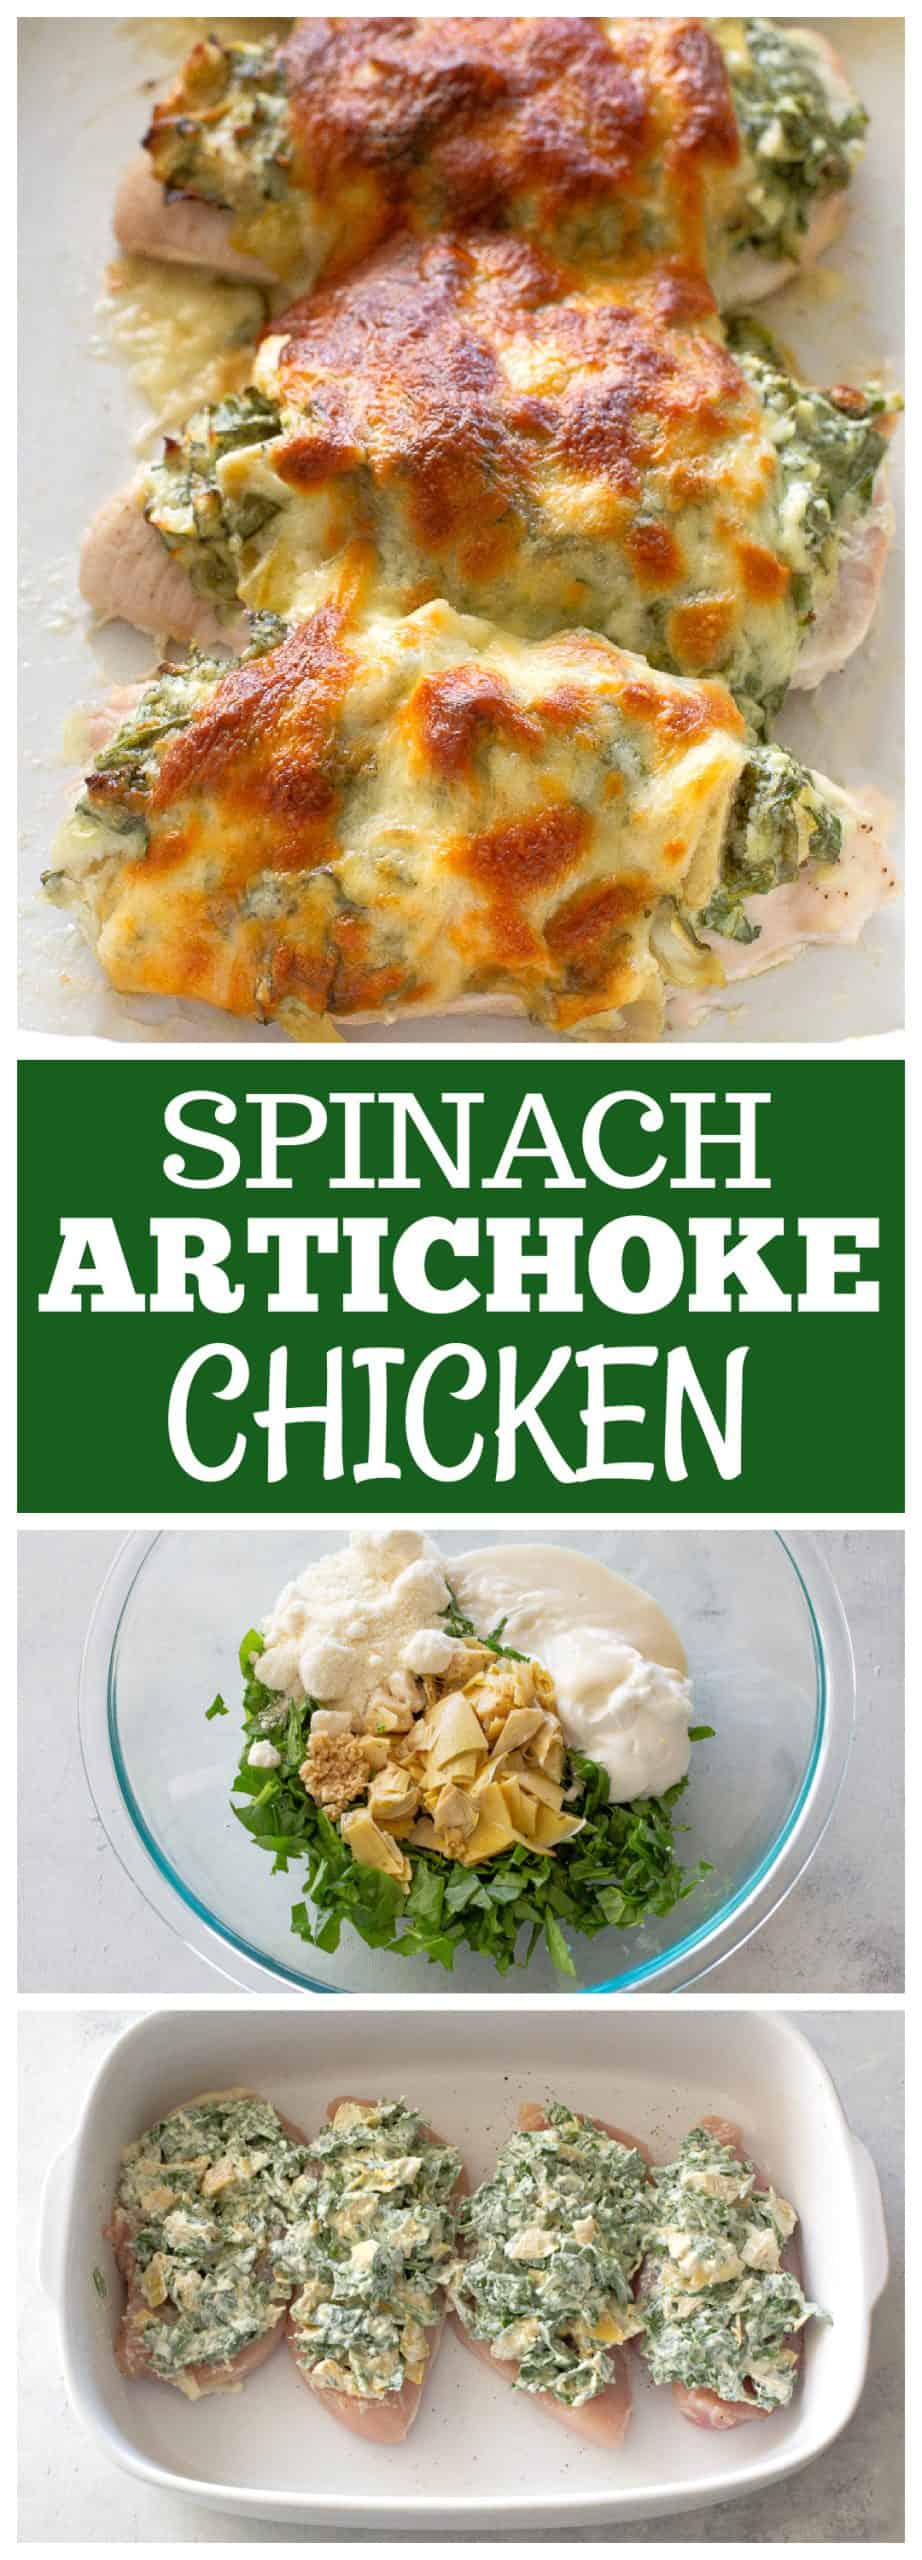 spinach artichoke chicken scaled - Spinach Artichoke Chicken